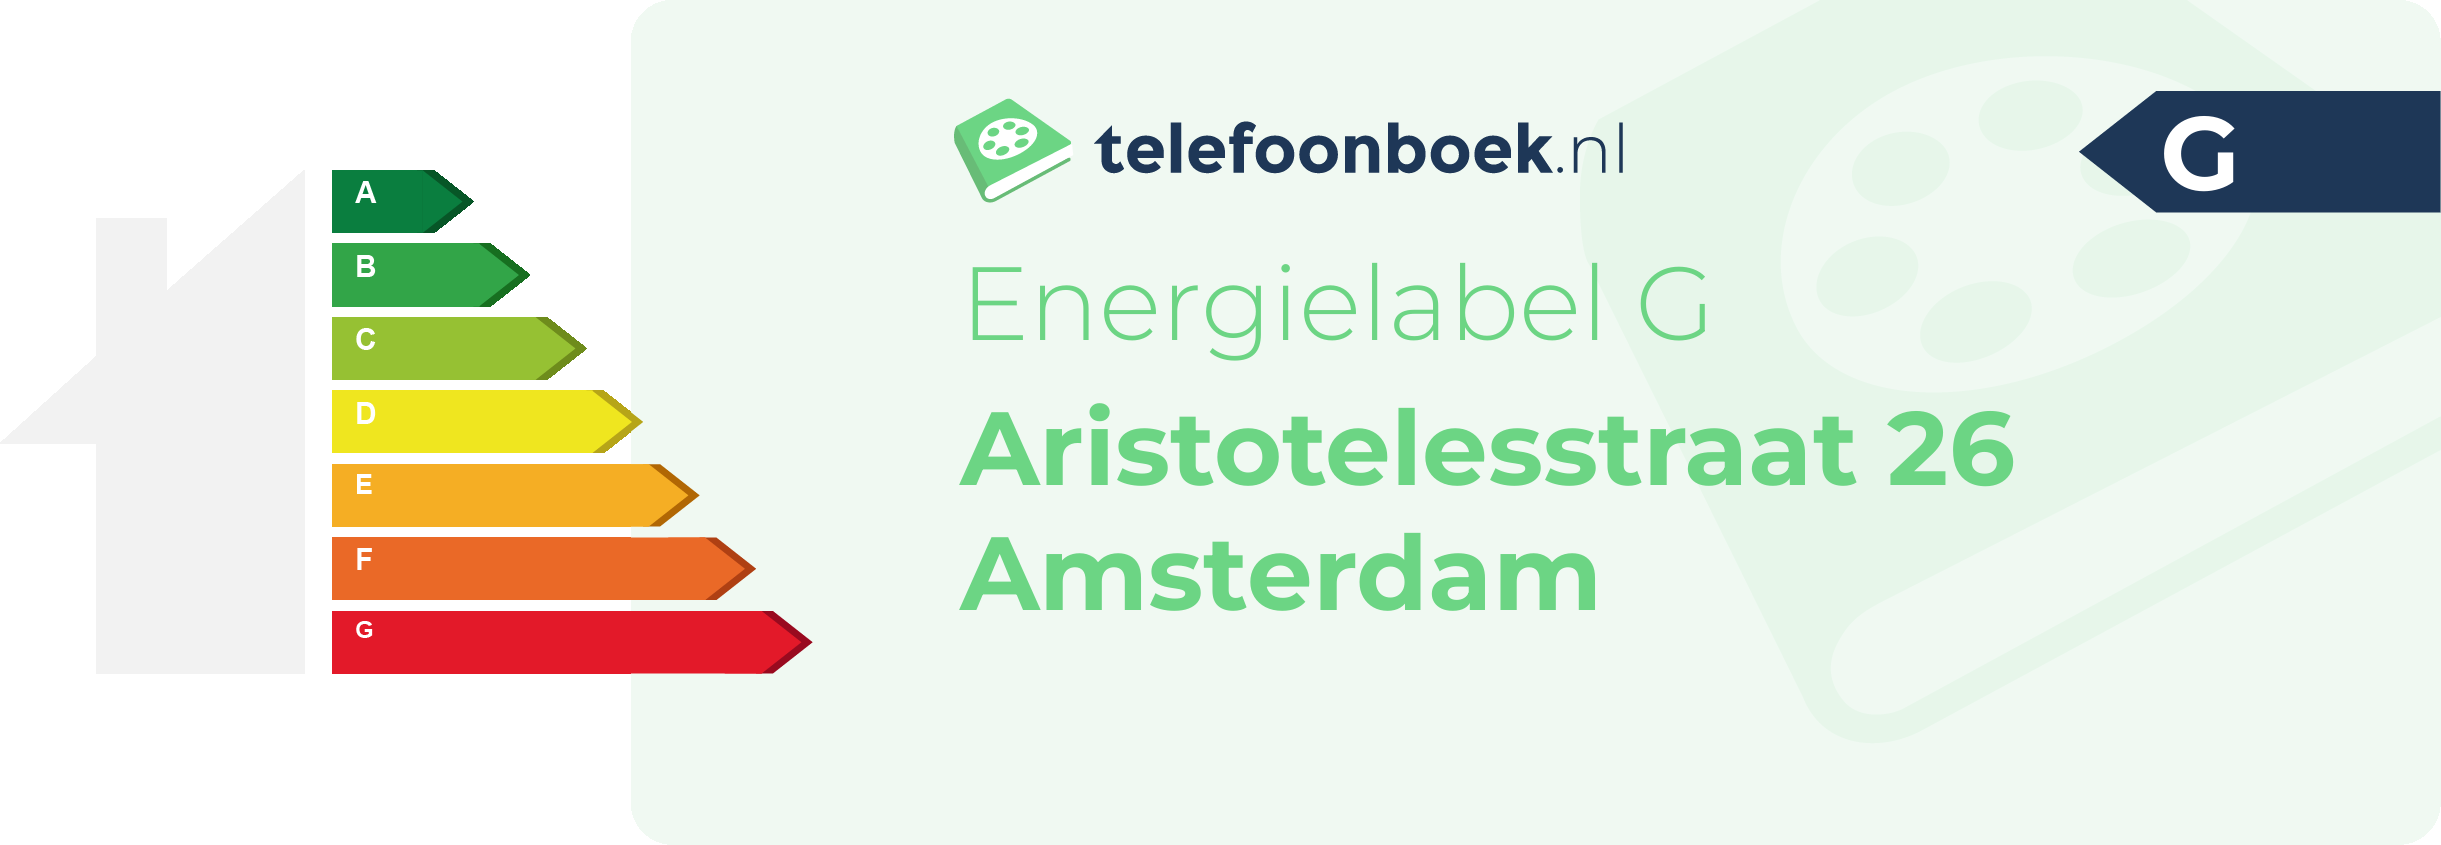 Energielabel Aristotelesstraat 26 Amsterdam